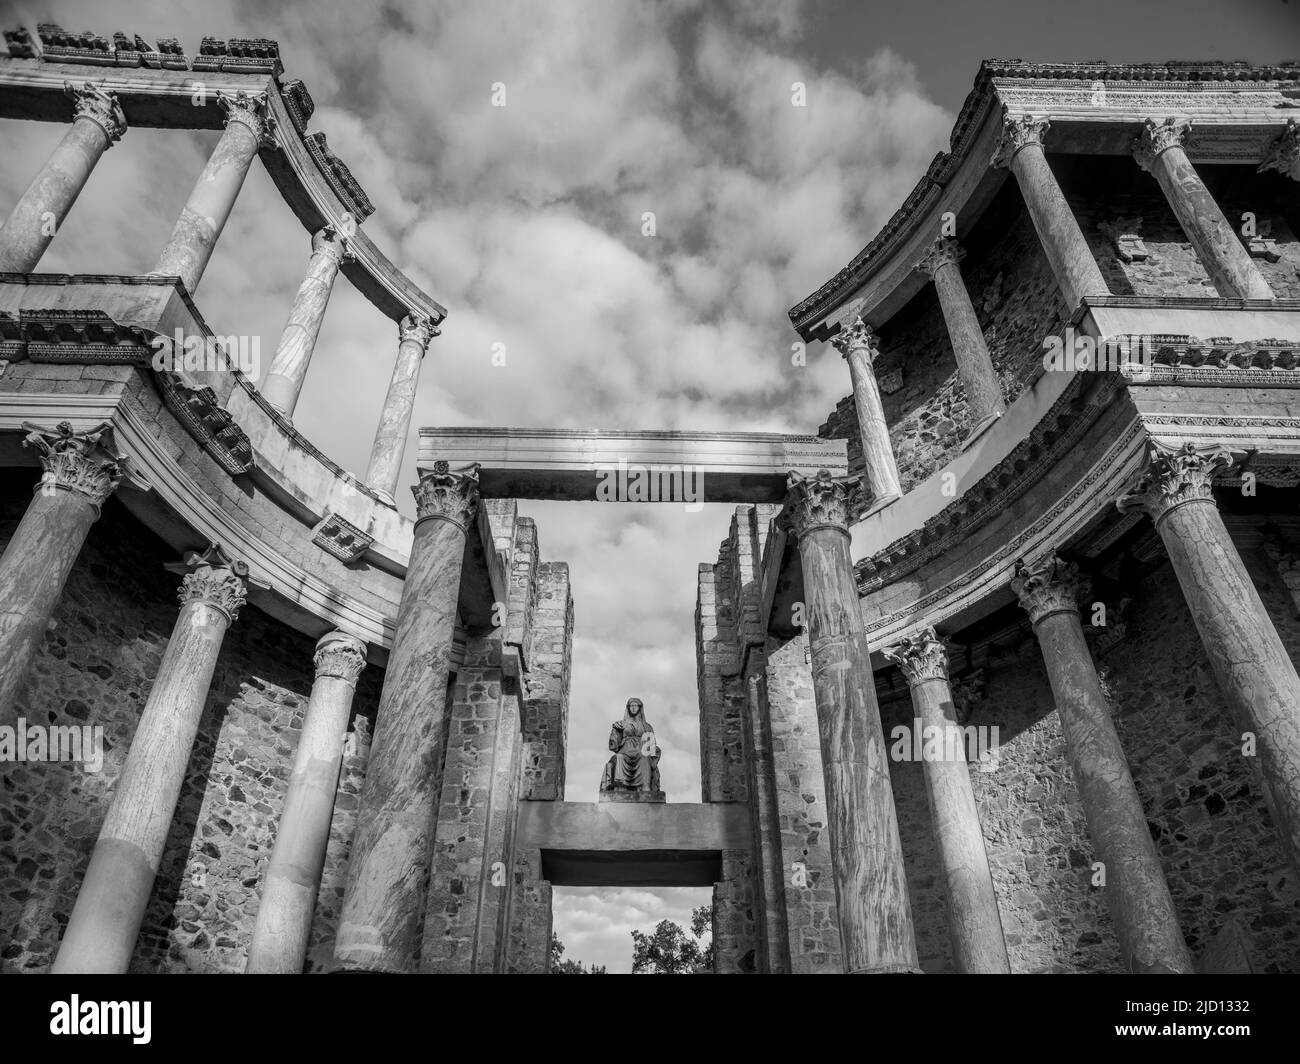 The Roman Theatre of Merida in Merida, Spain Stock Photo